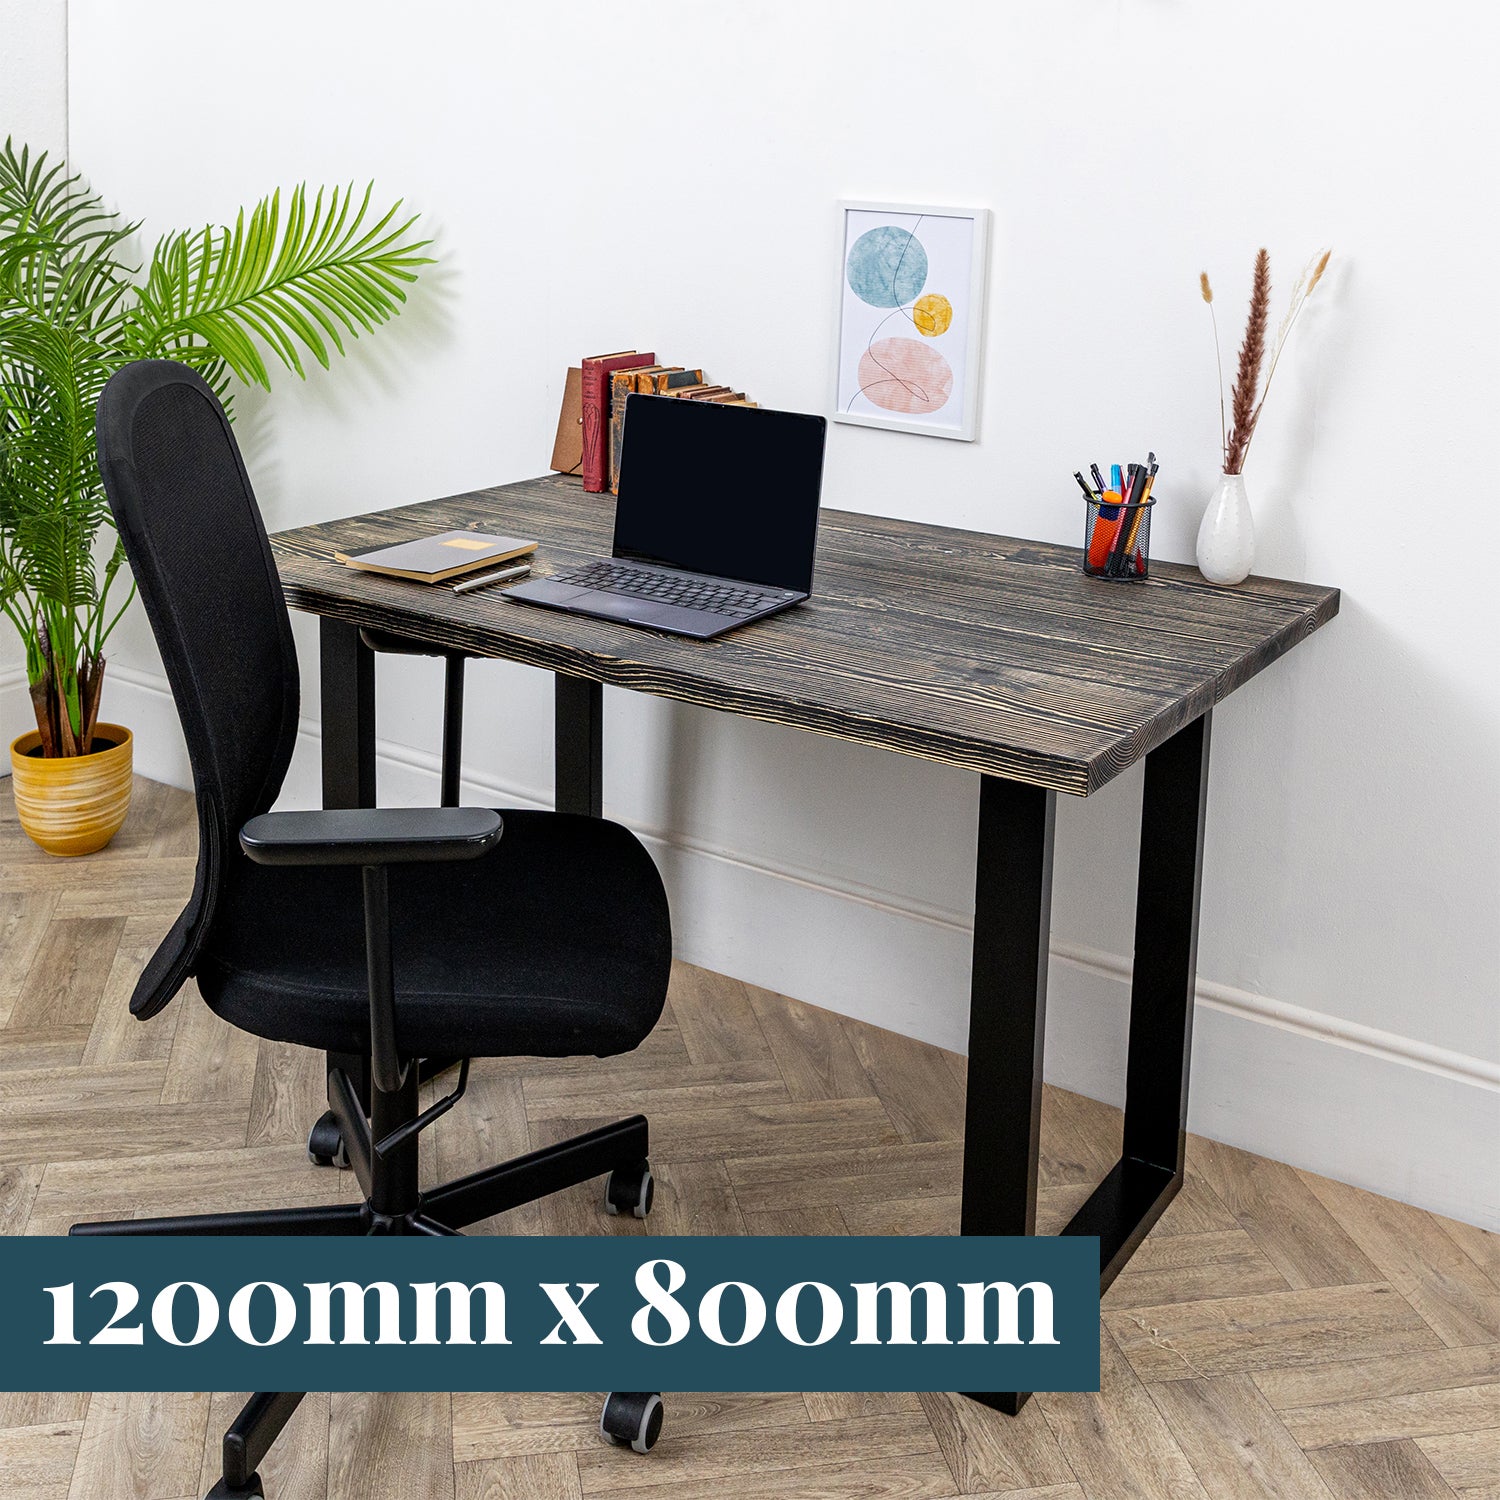 Dark Wood Desk with Square Metal Legs #length_1200mm depth_800mm